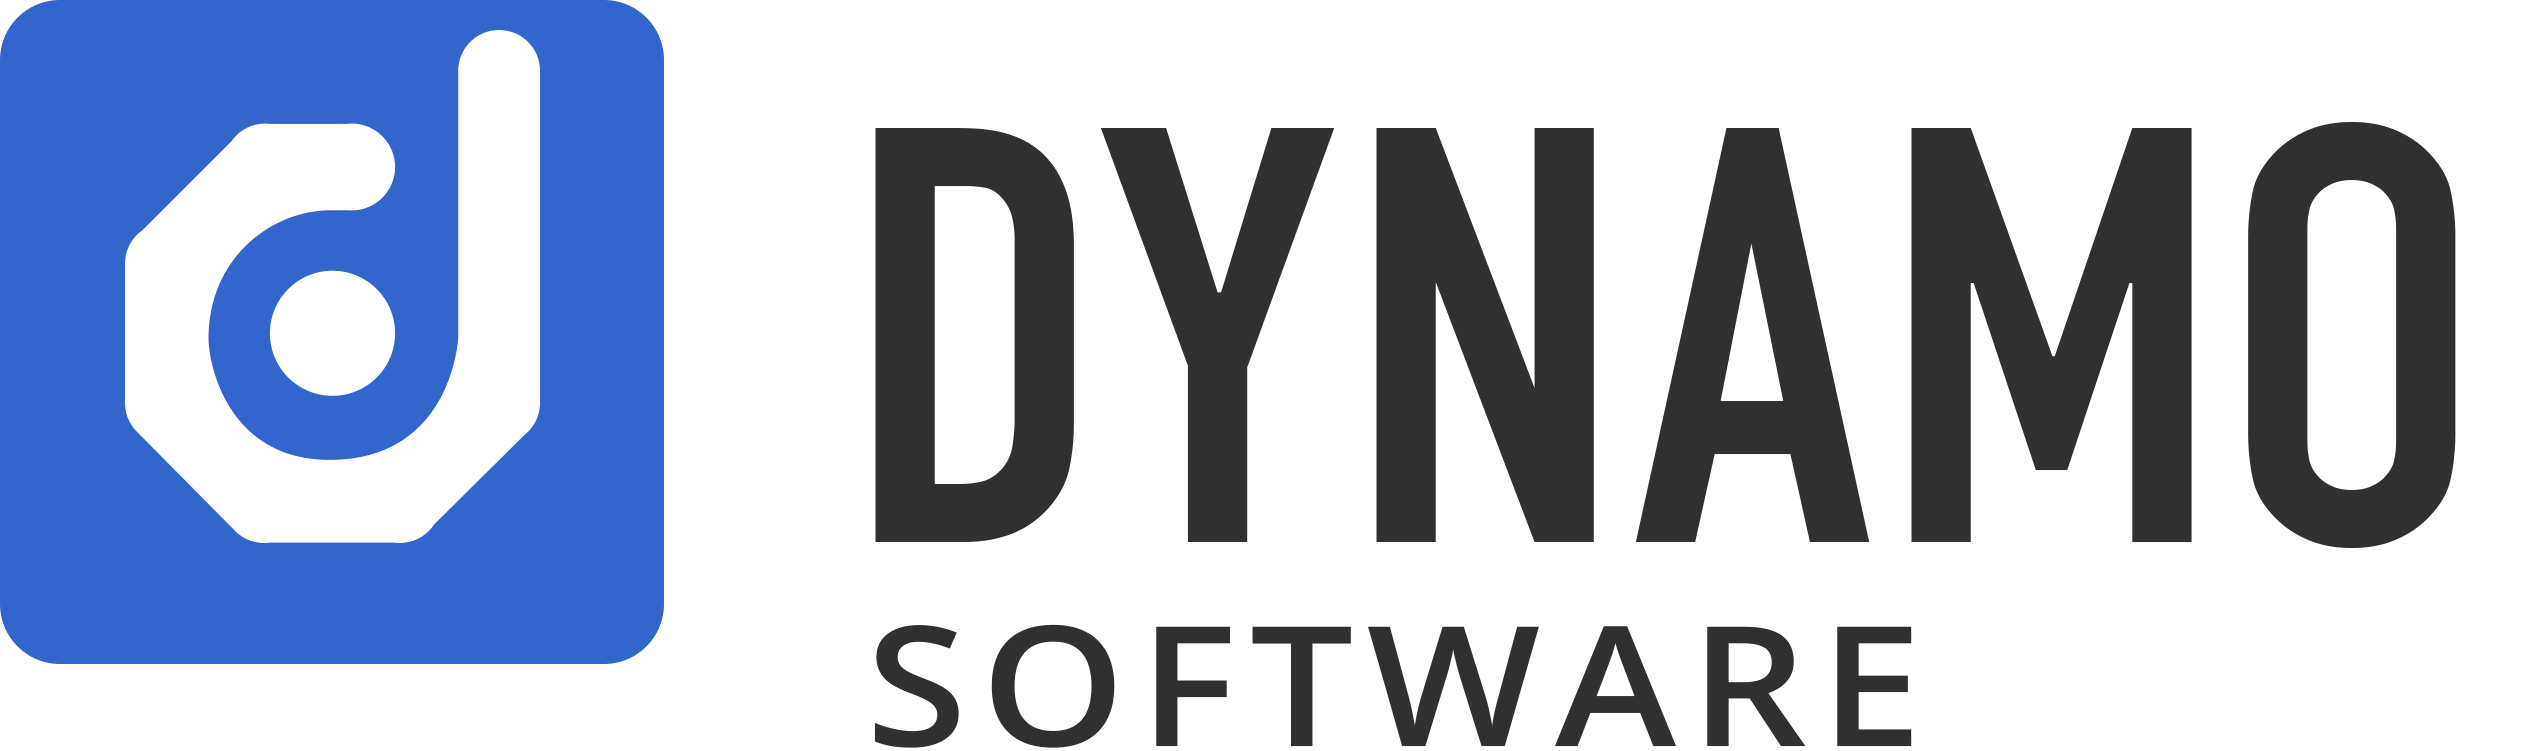 Dynamo Logo - Dynamo Software Corporate Logo.png